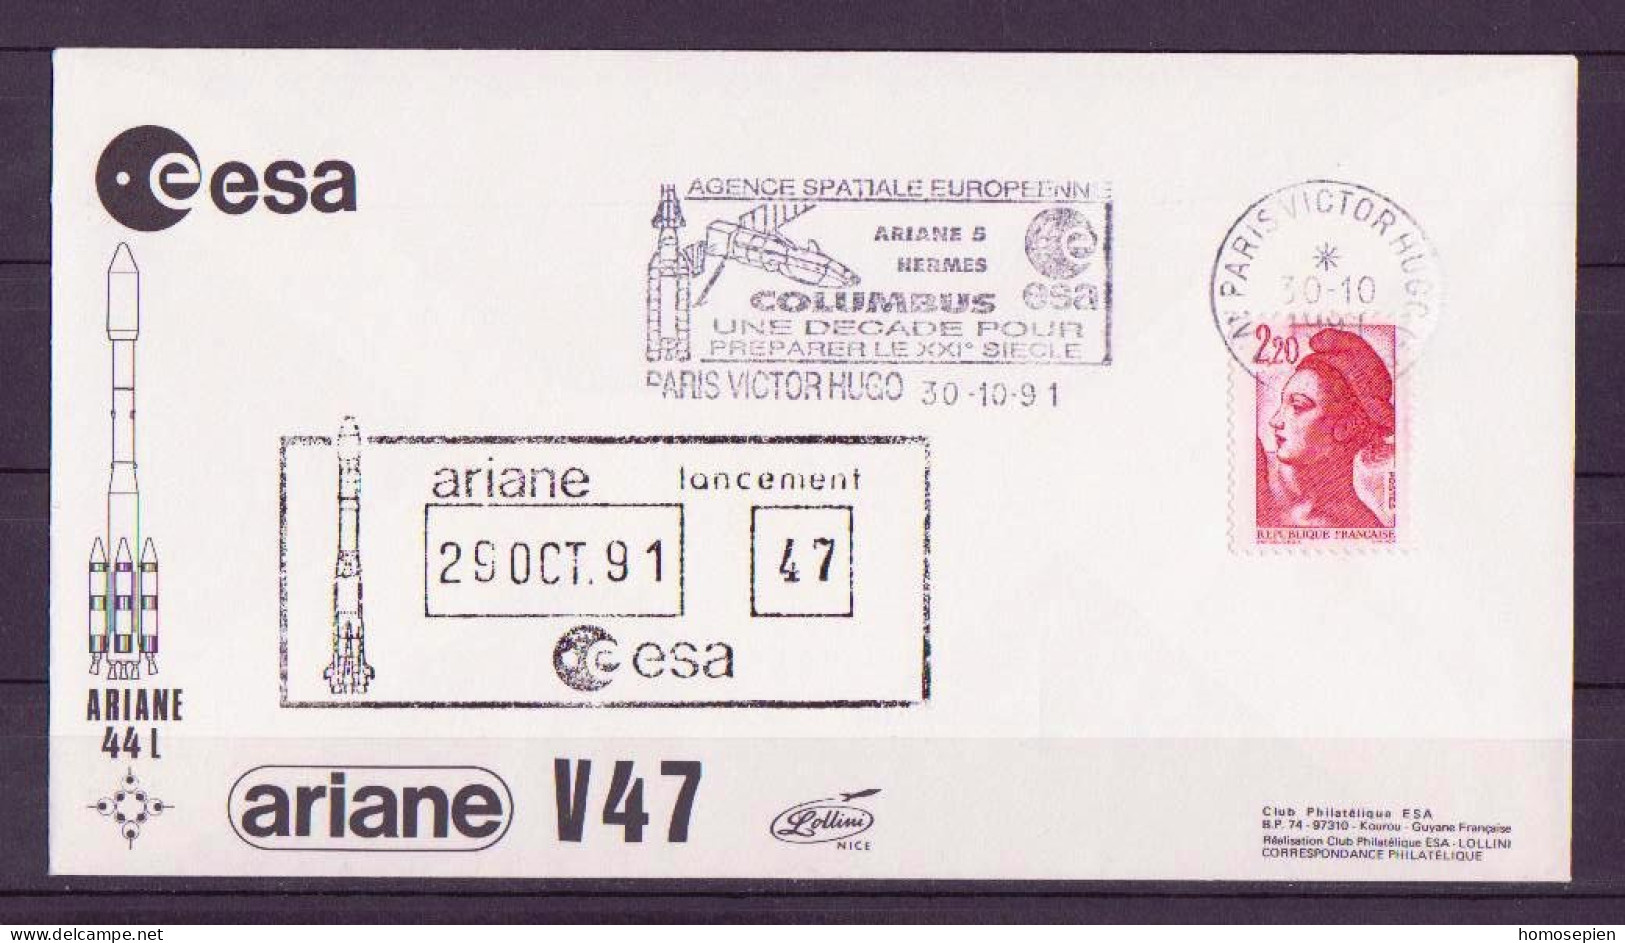 Espace 1991 10 30 - ESA - Ariane V47 - Officielle - Paris - Europe